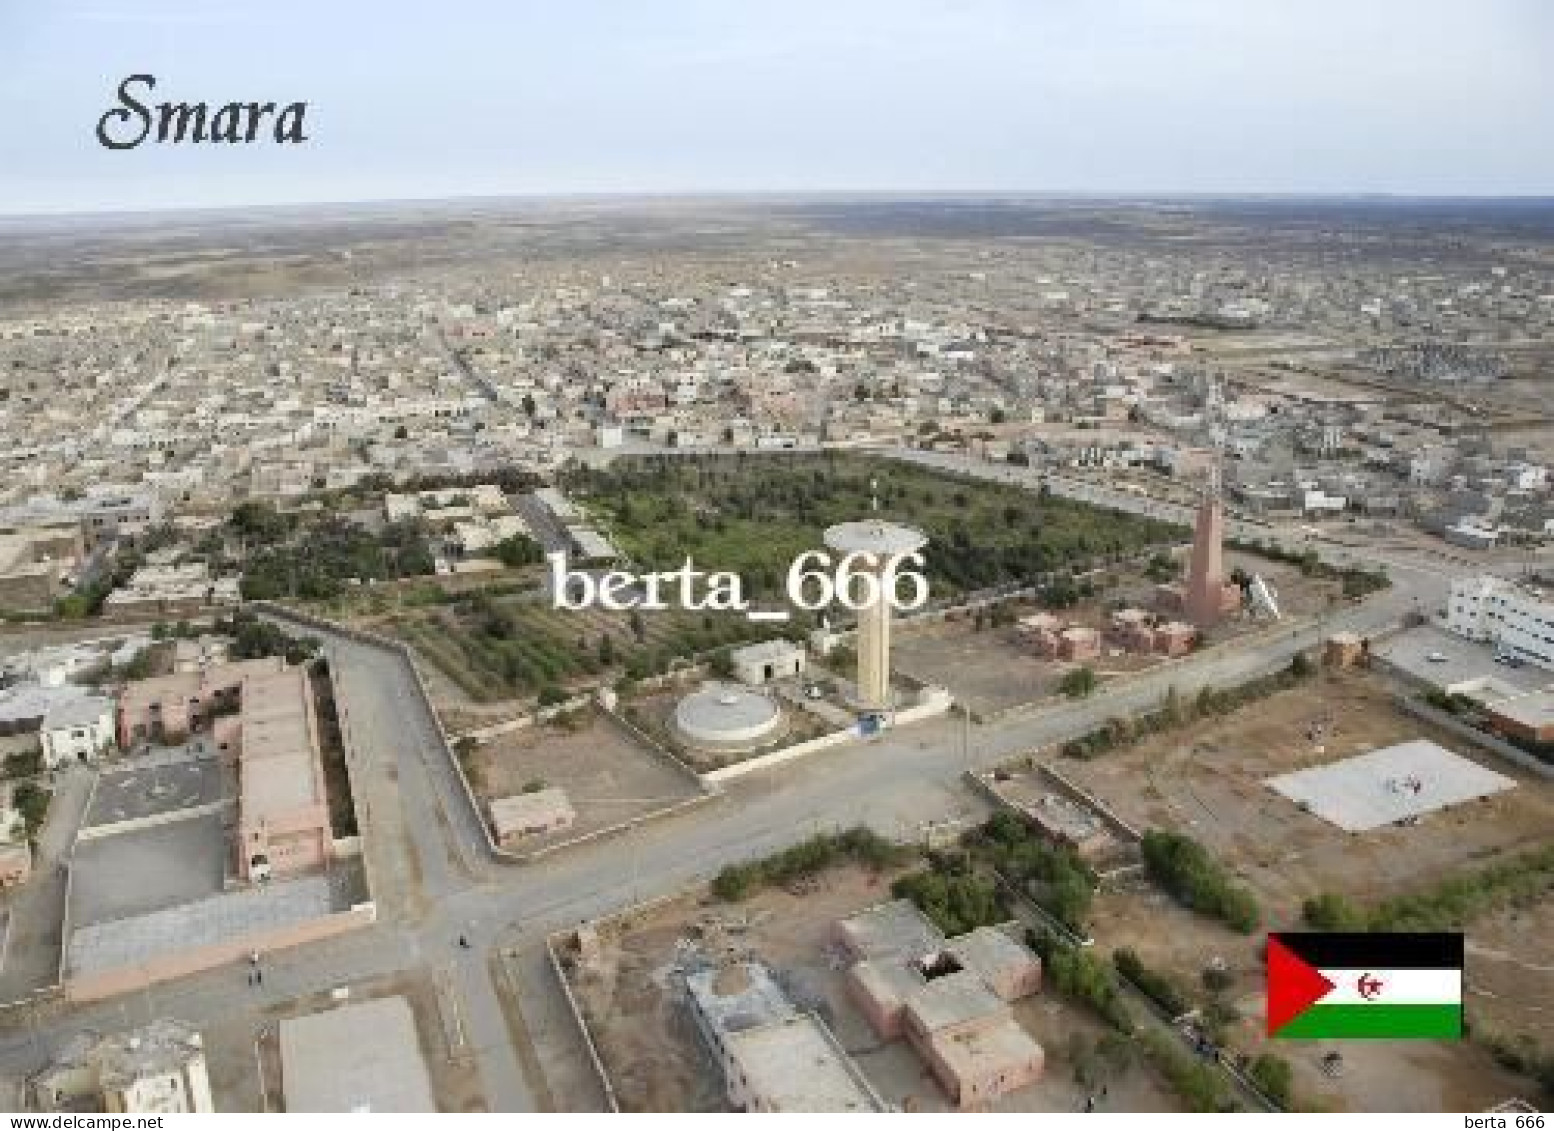 Western Sahara Smara Aerial View New Postcard - Westsahara